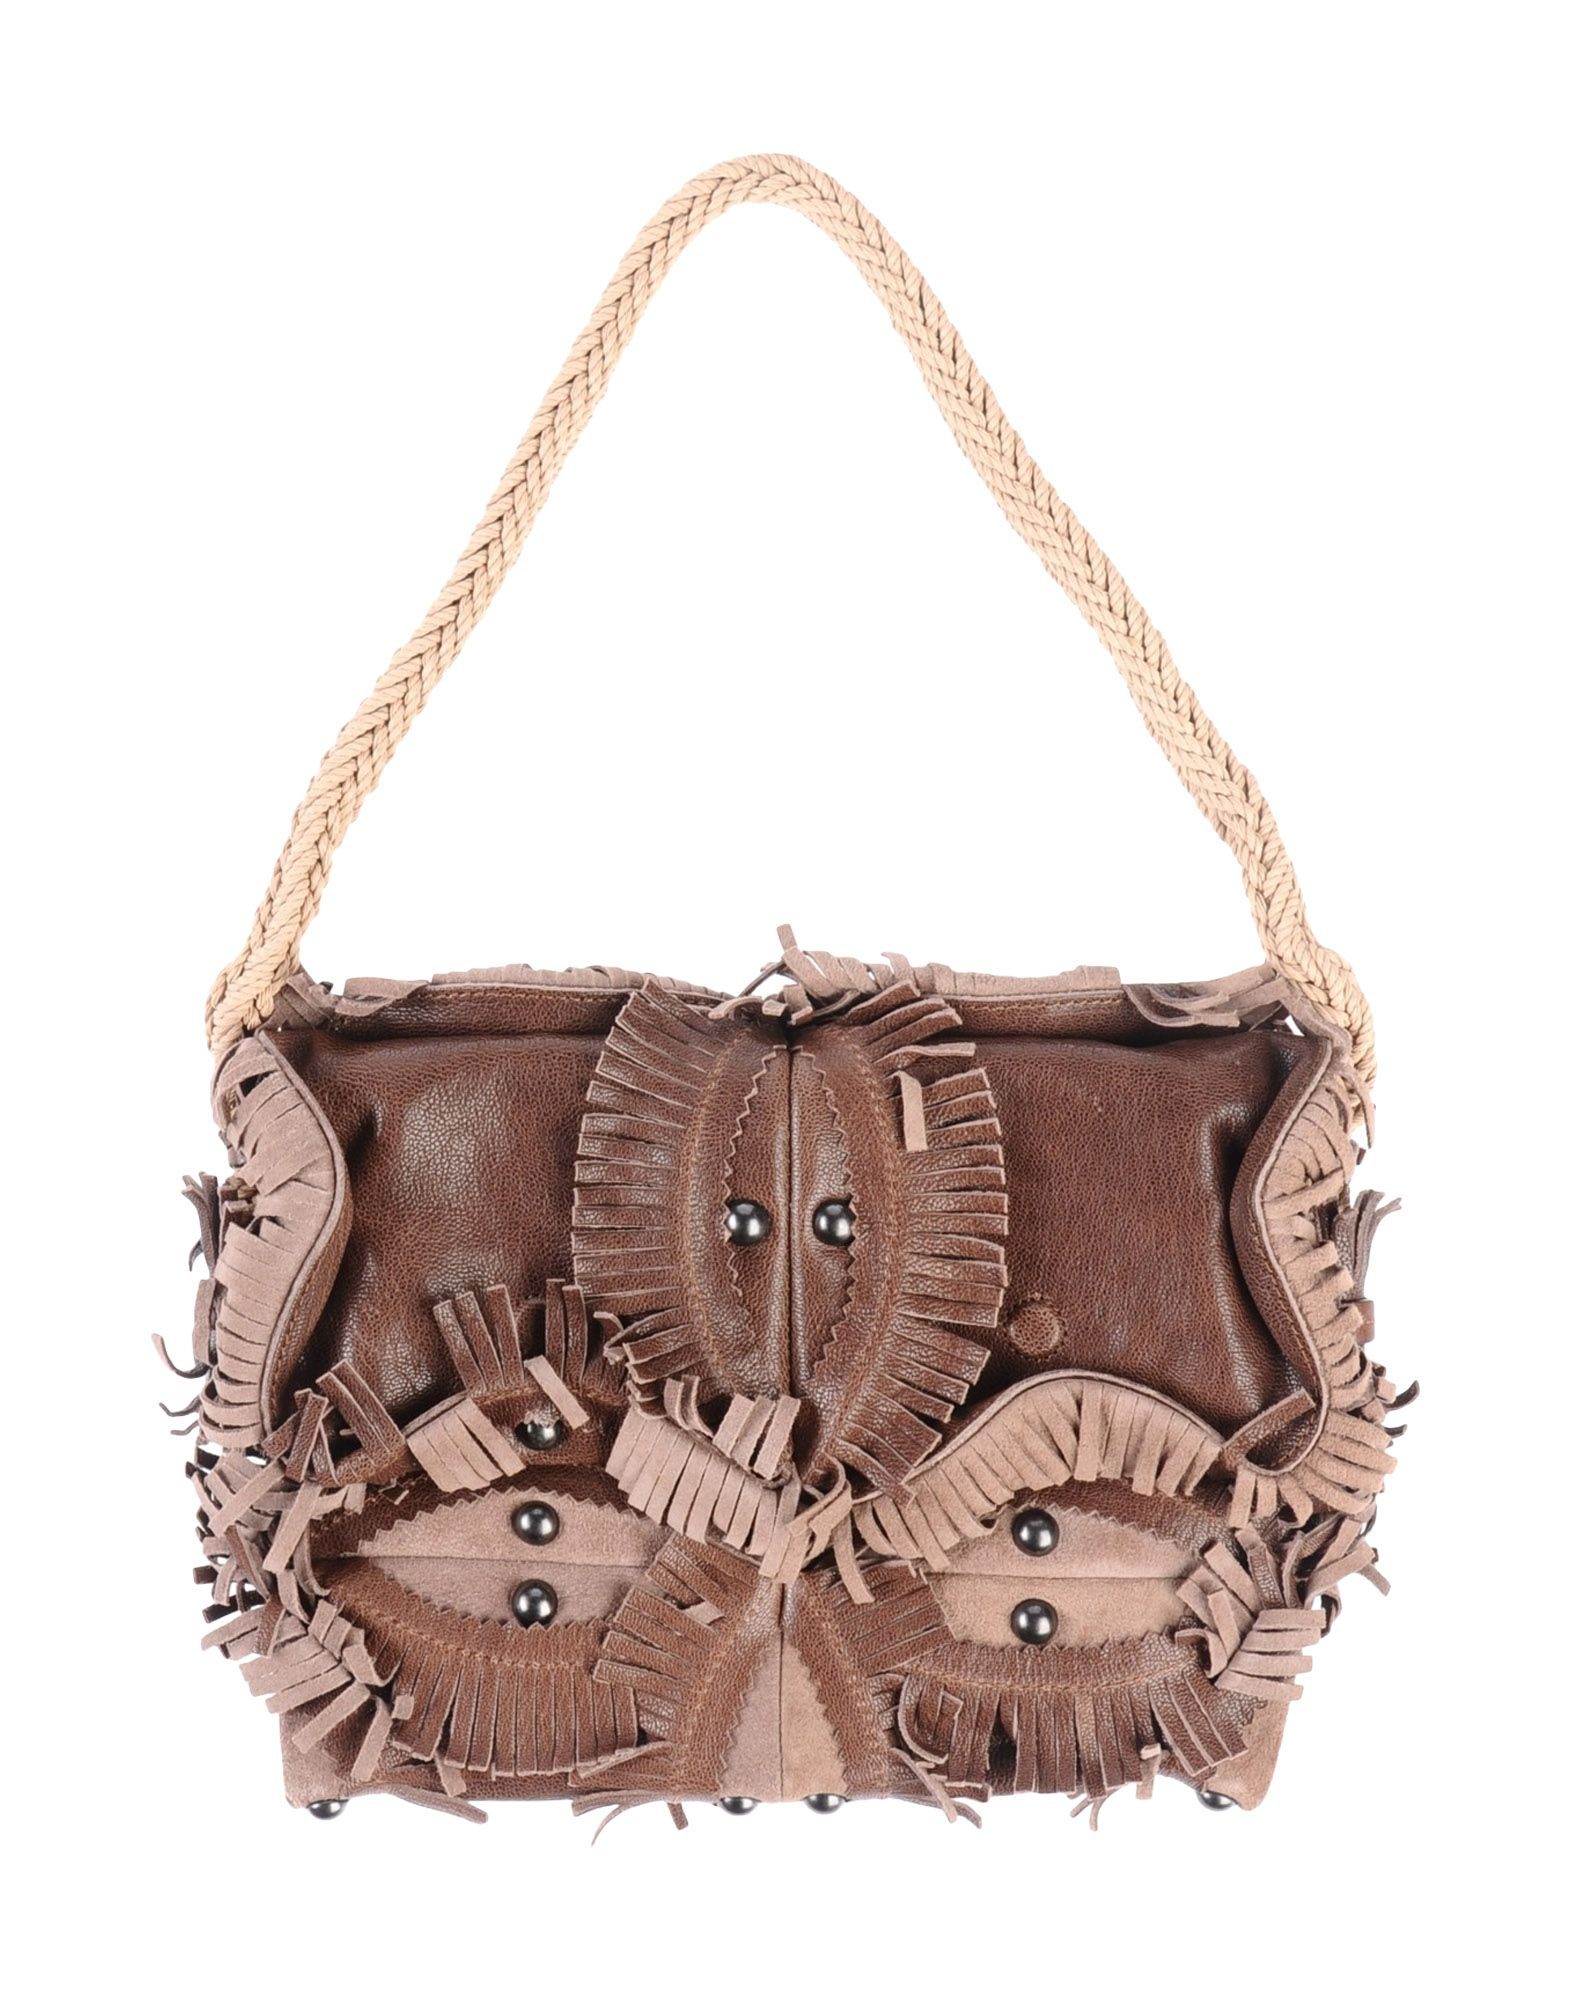 Jamin Puech Leather Handbag in Cocoa (Brown) - Lyst